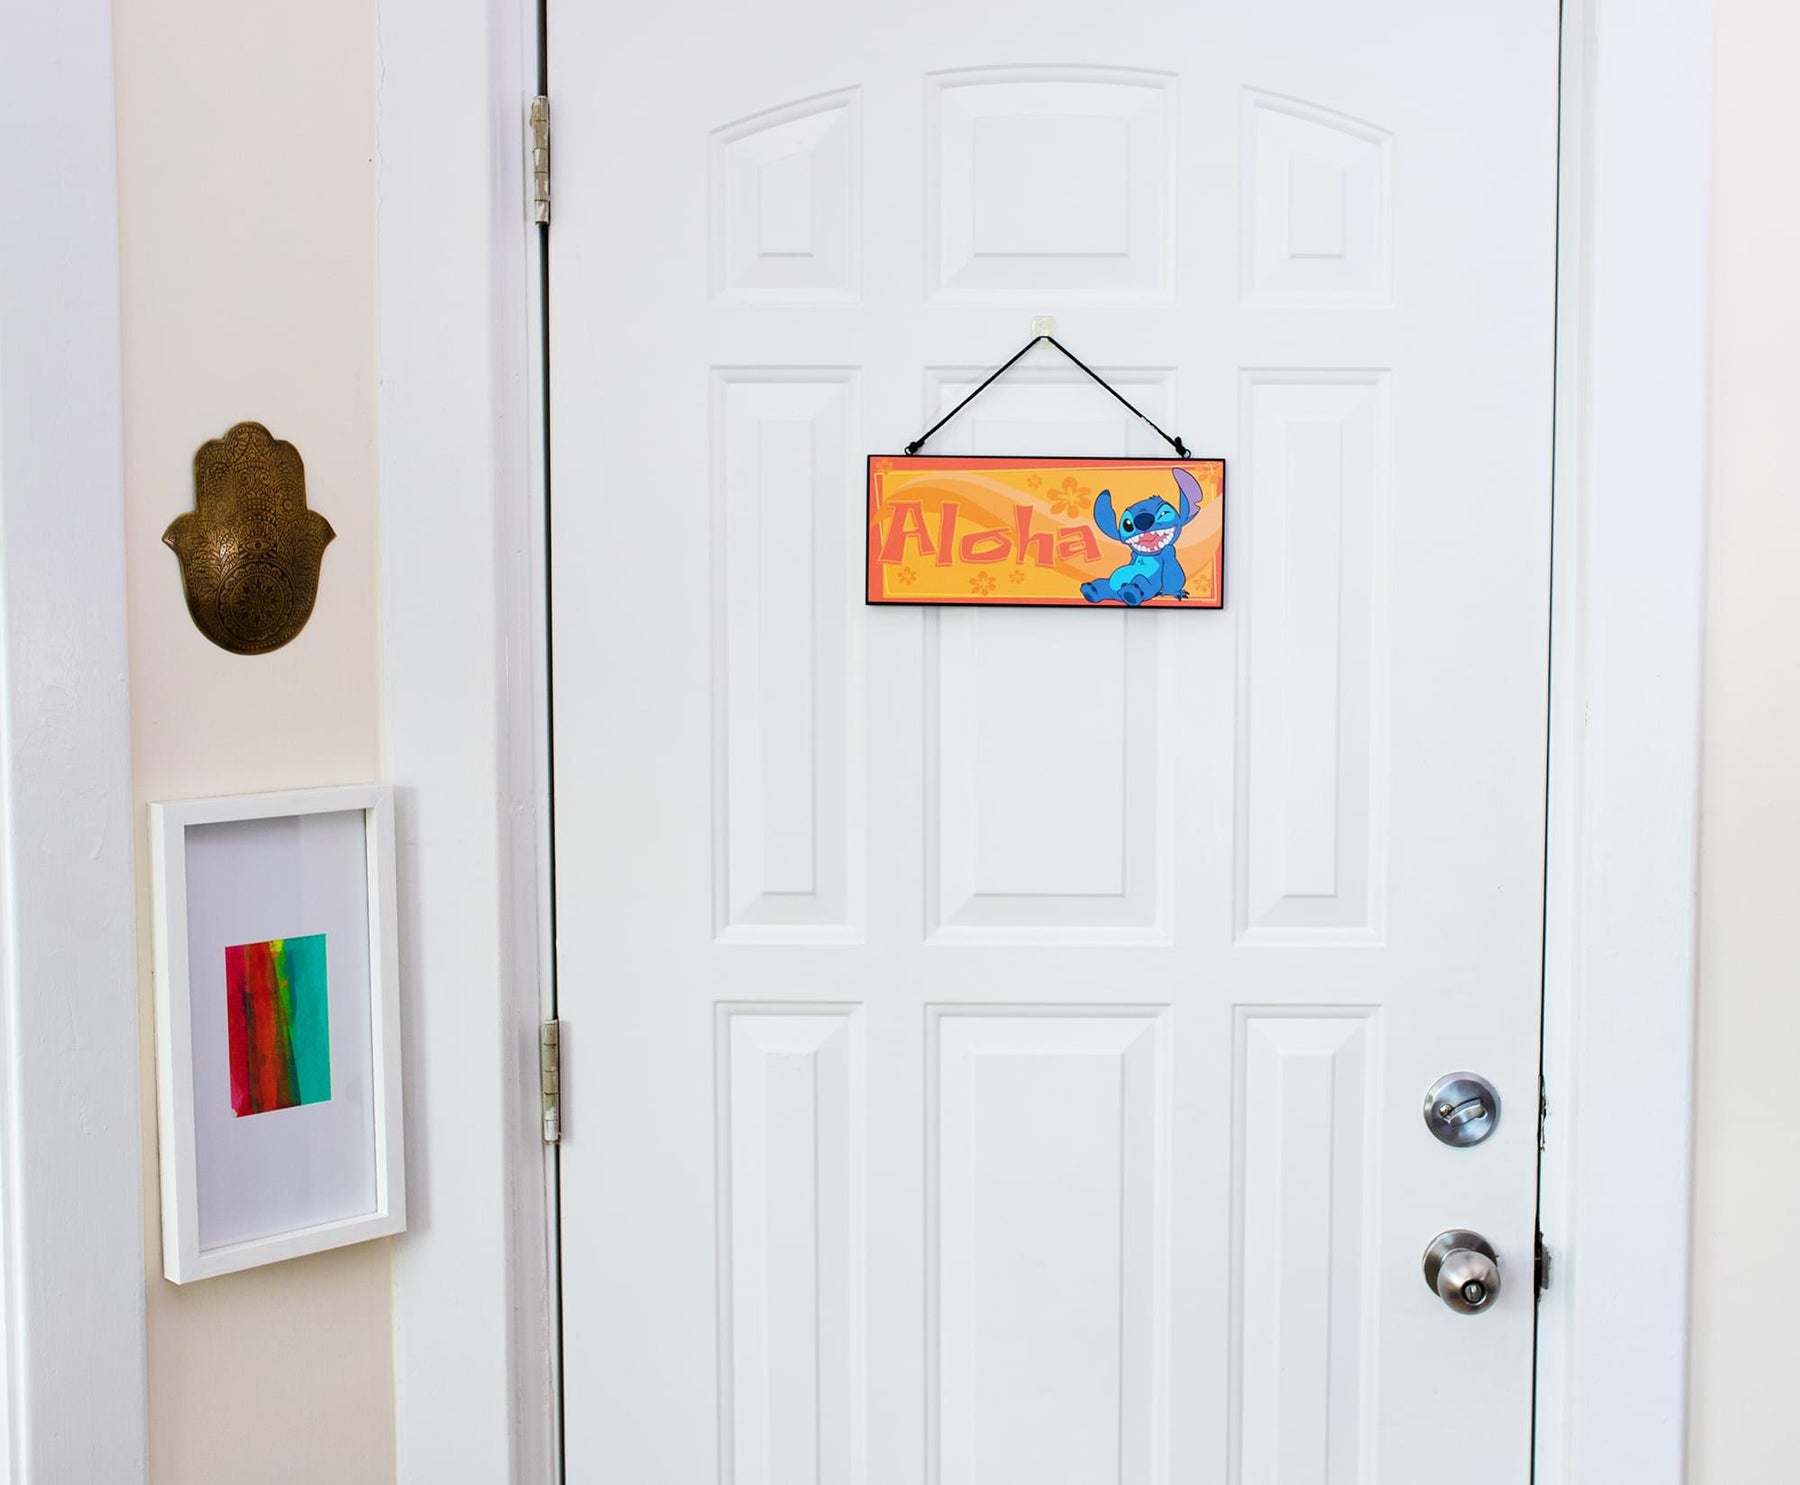 Disney Lilo & Stitch Aloha Reversible Hanging Sign Wall Art | 12 x 5 Inches